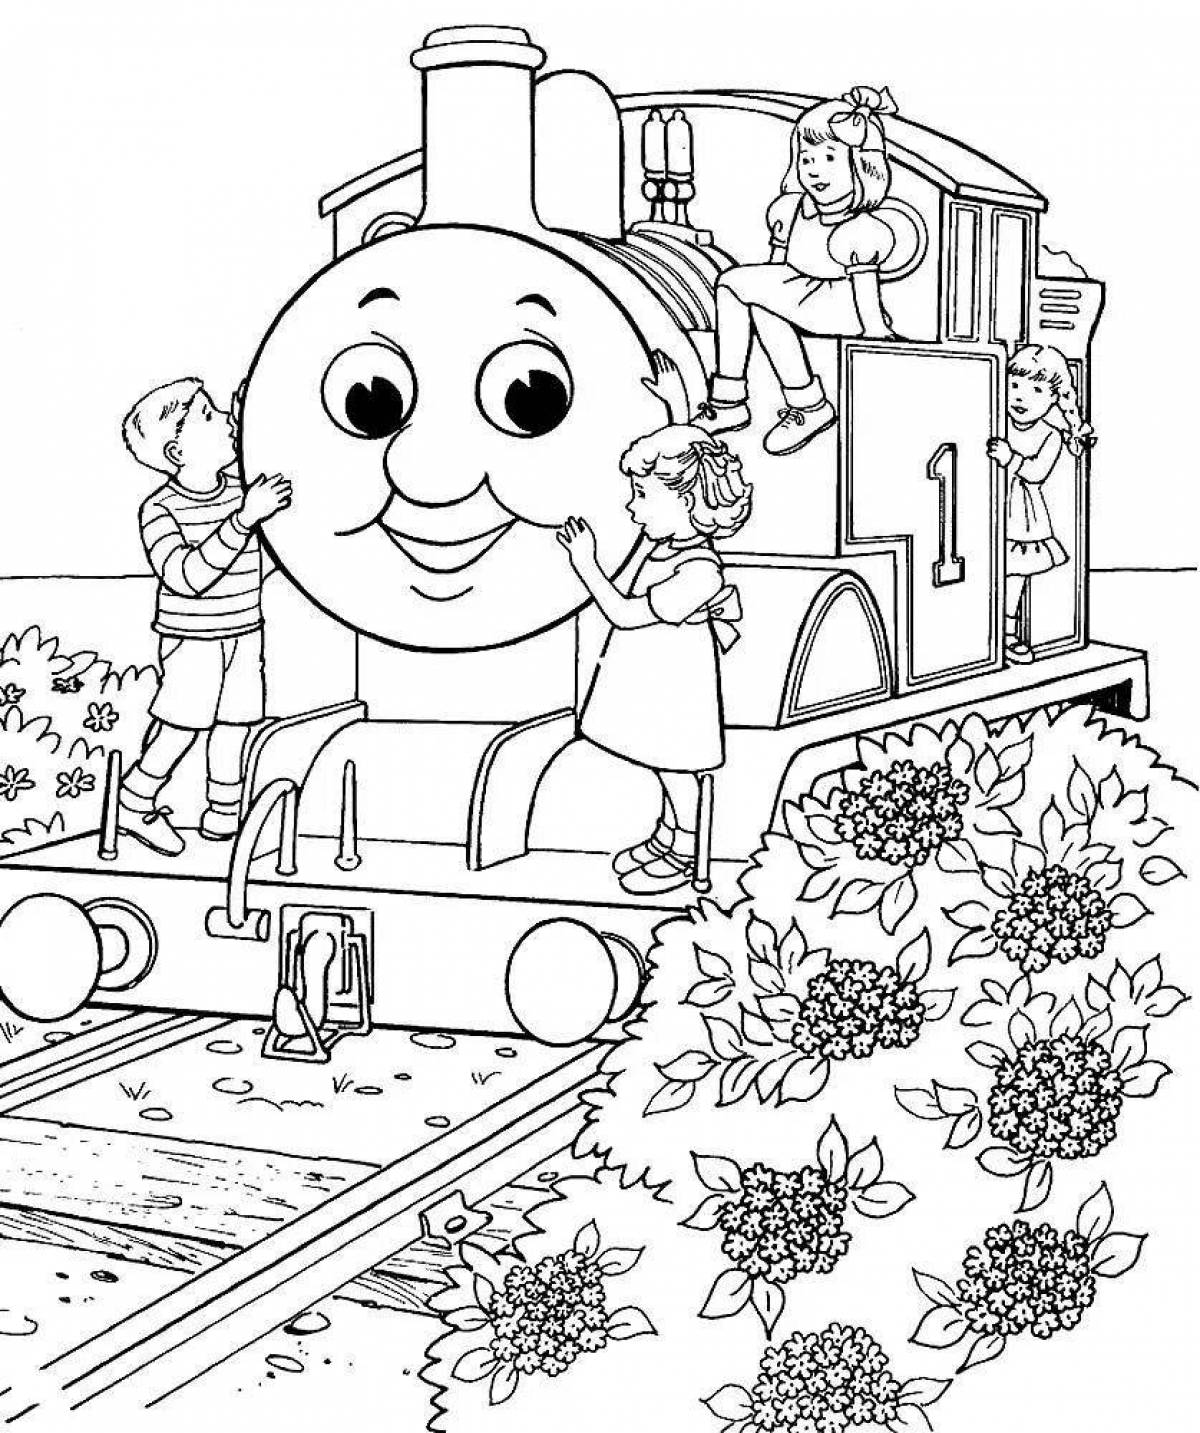 Thomas' fun coloring book for kids